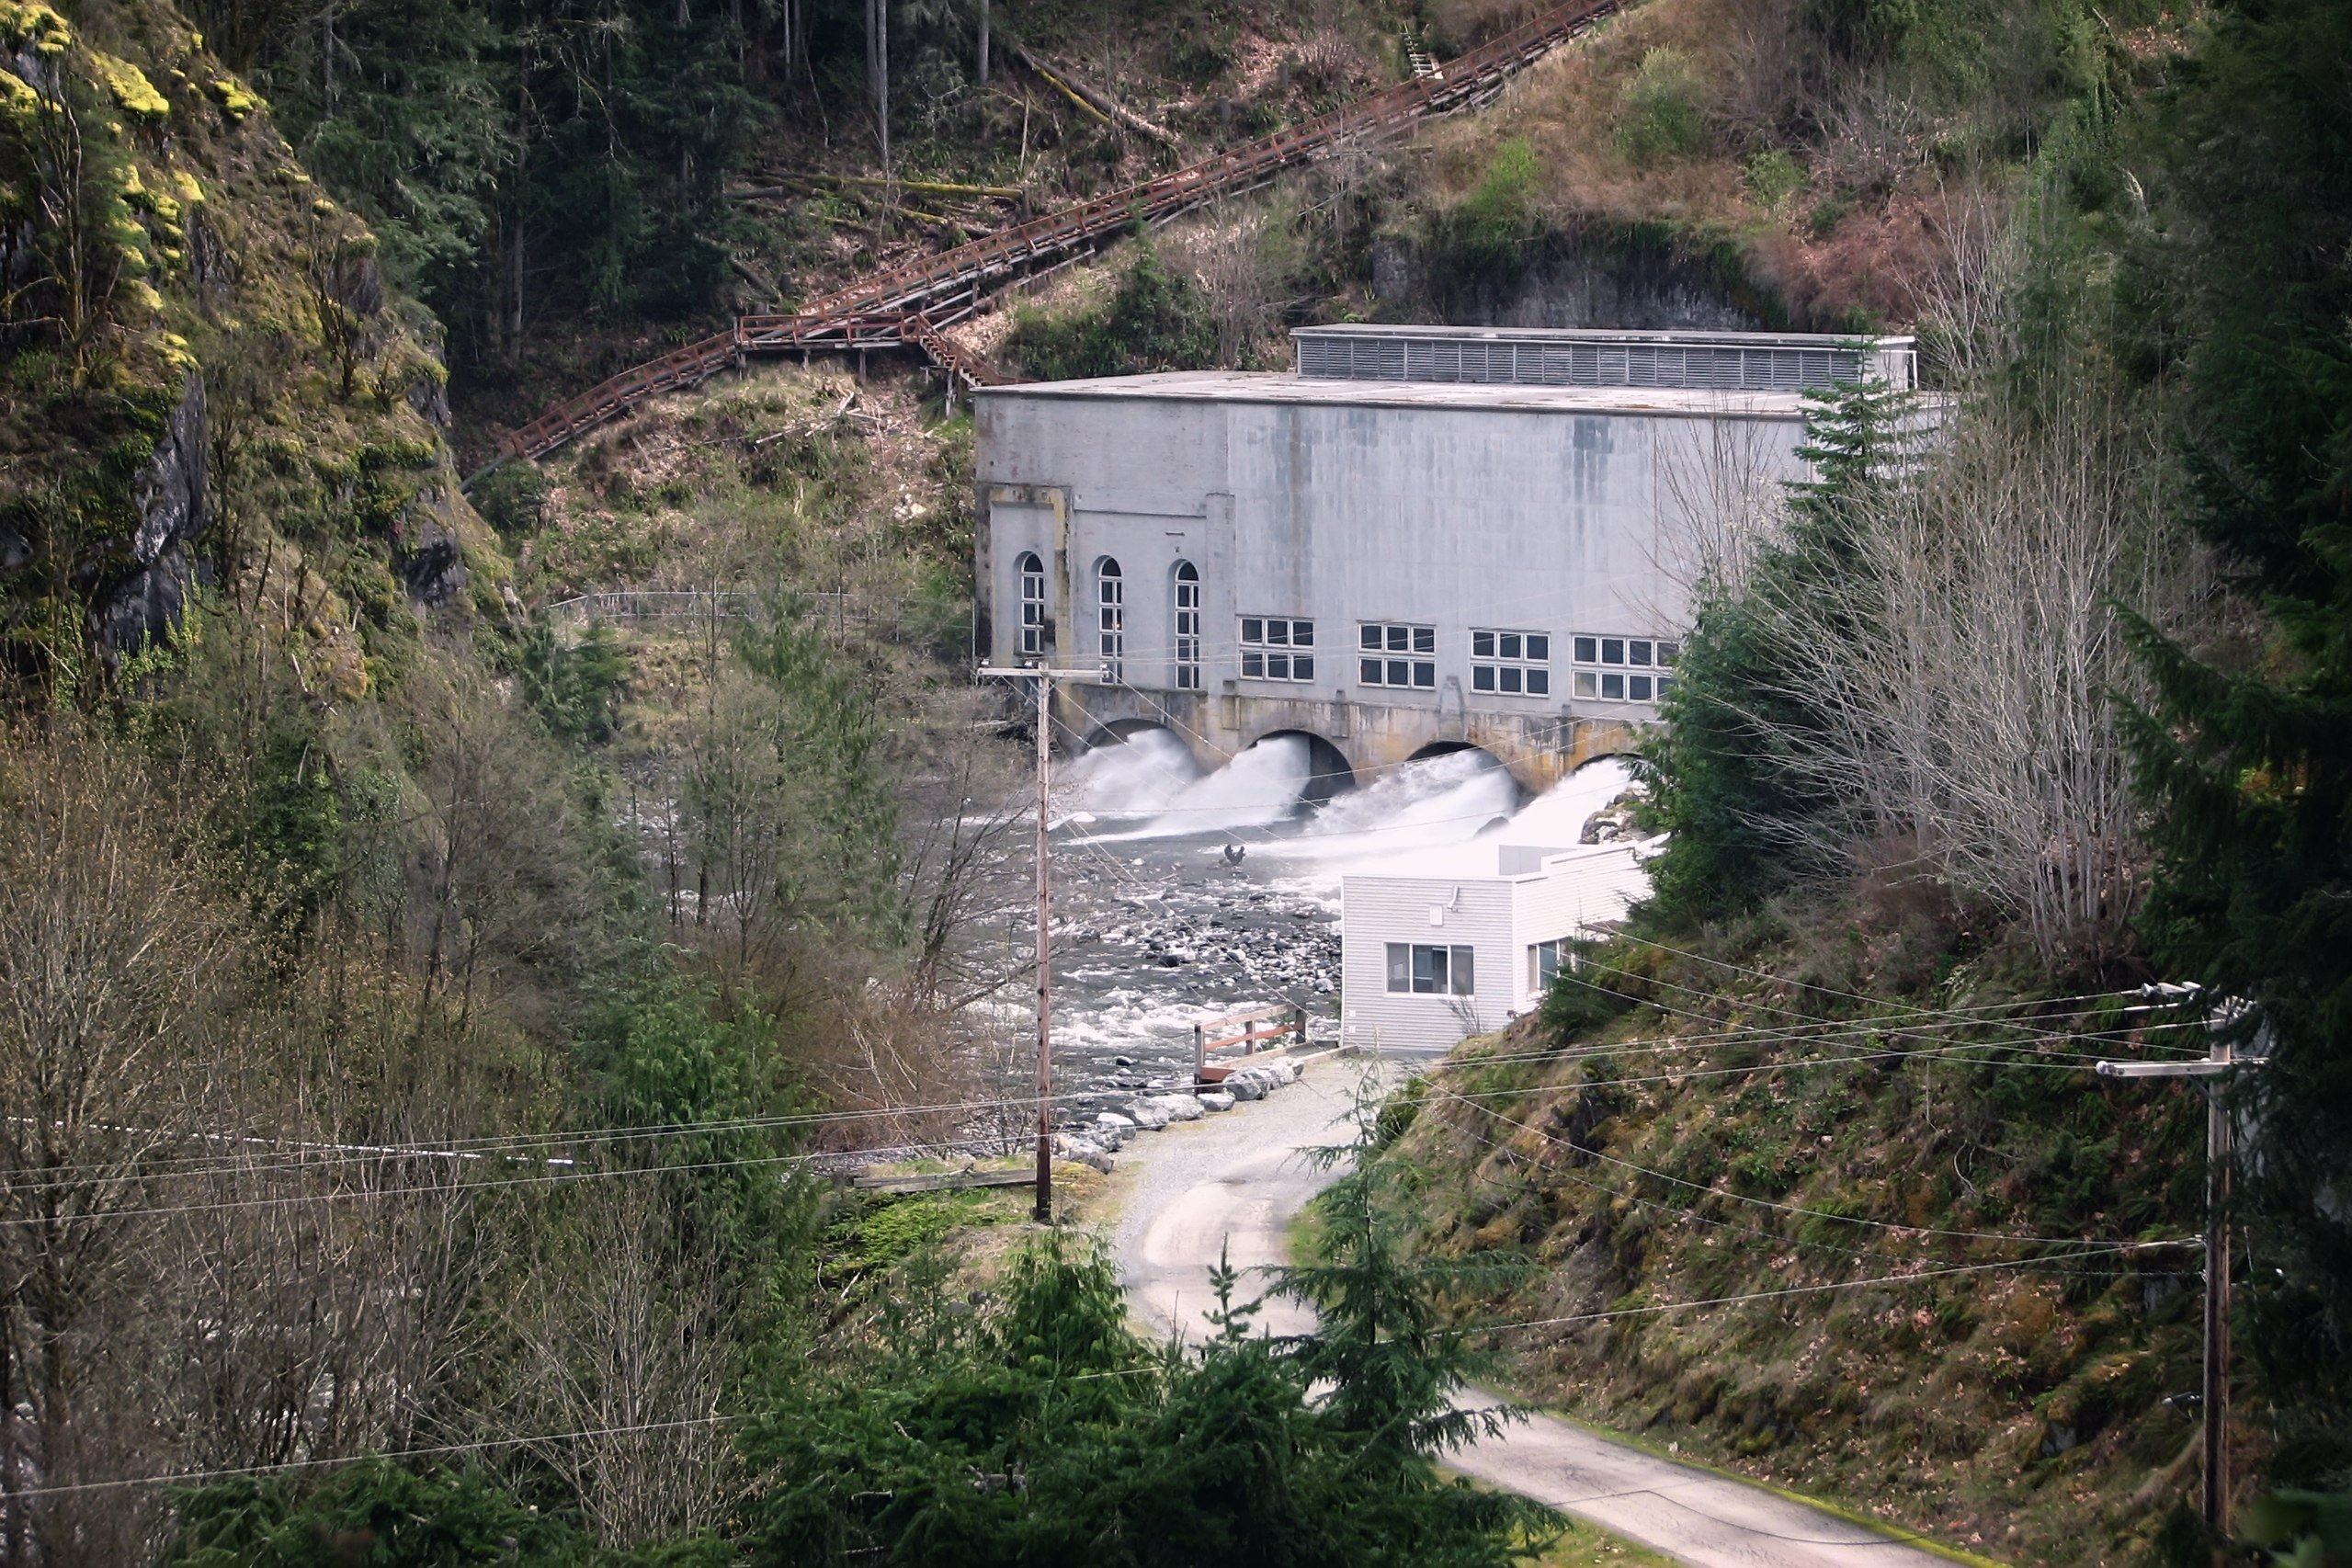  bitfarms million plant hydropower state company said 